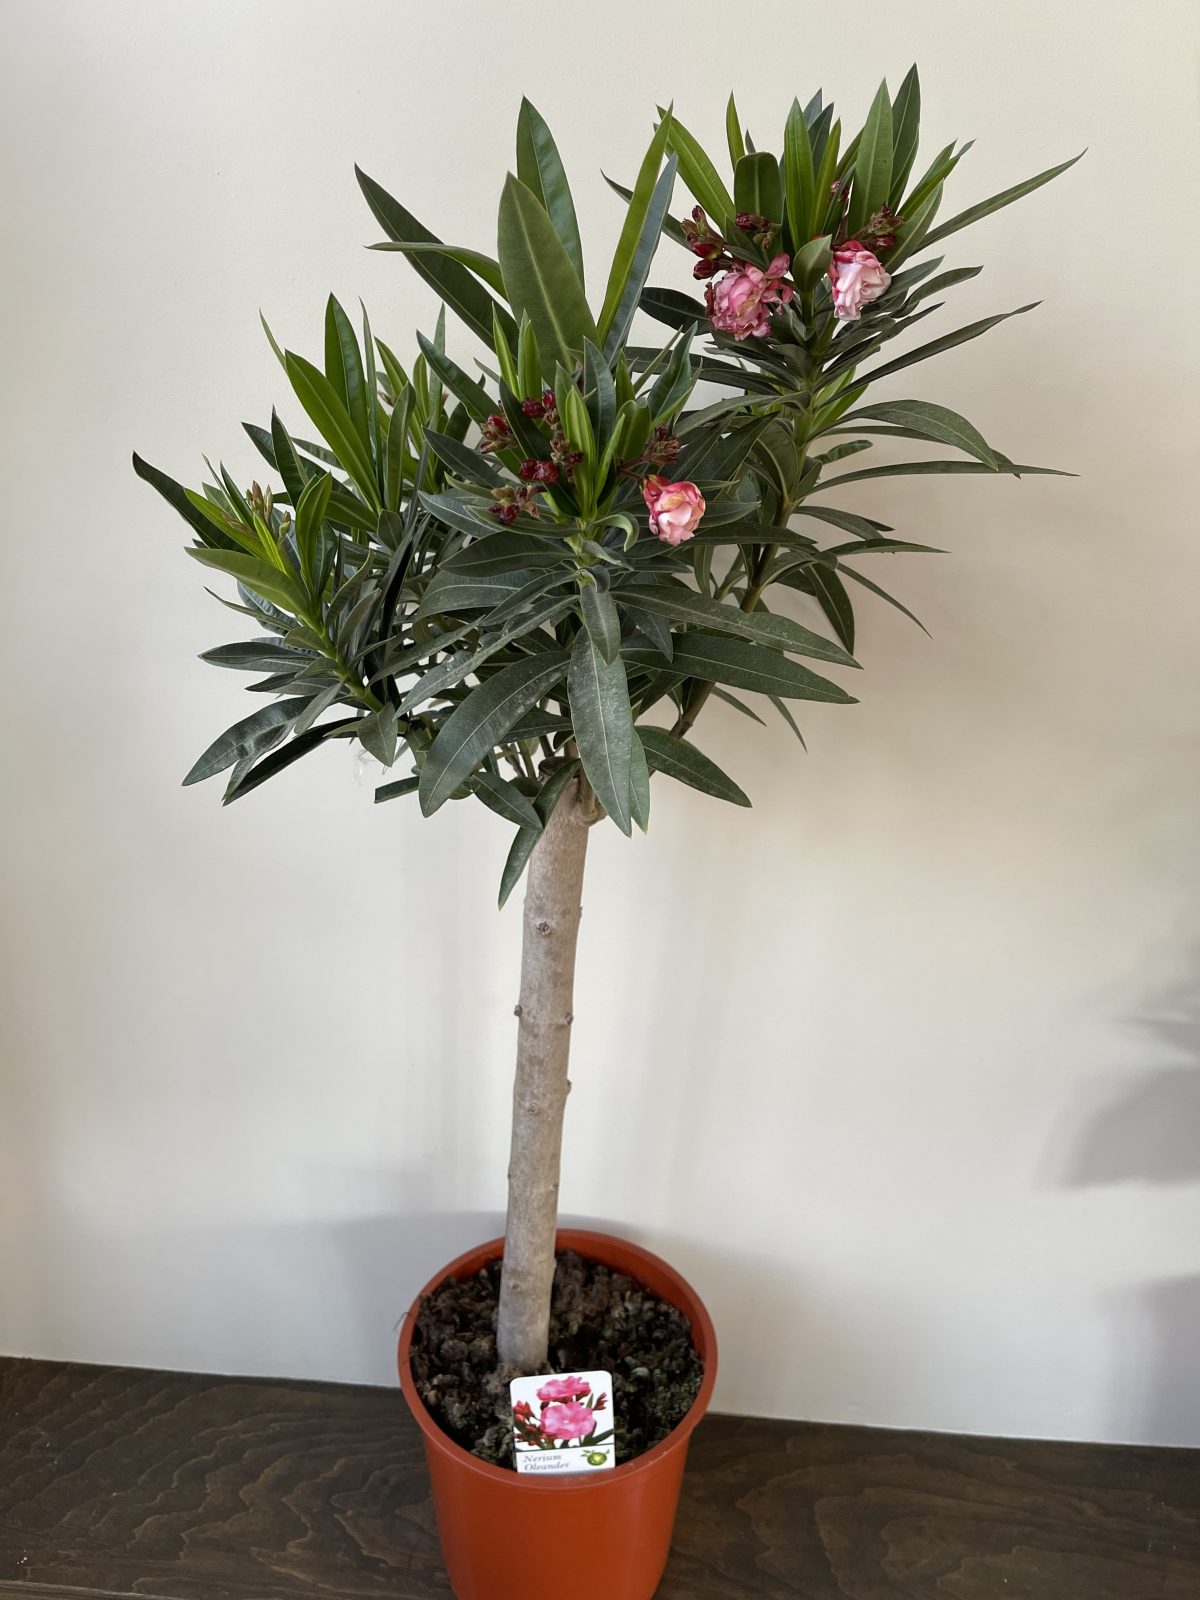 Олеандр звичайний Nerium oleander